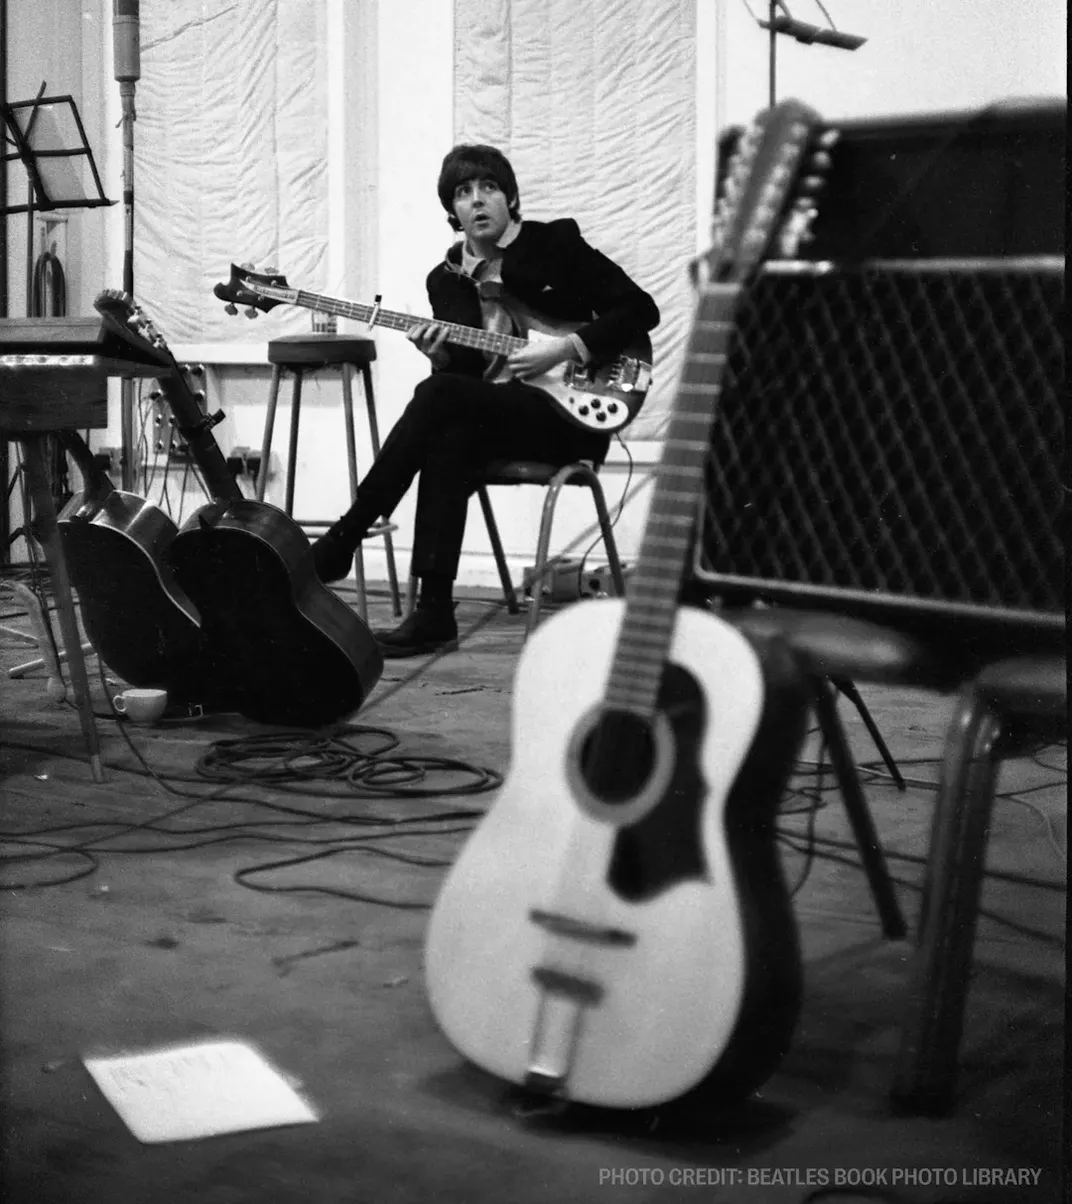 Lennon's guitar and Paul McCartney